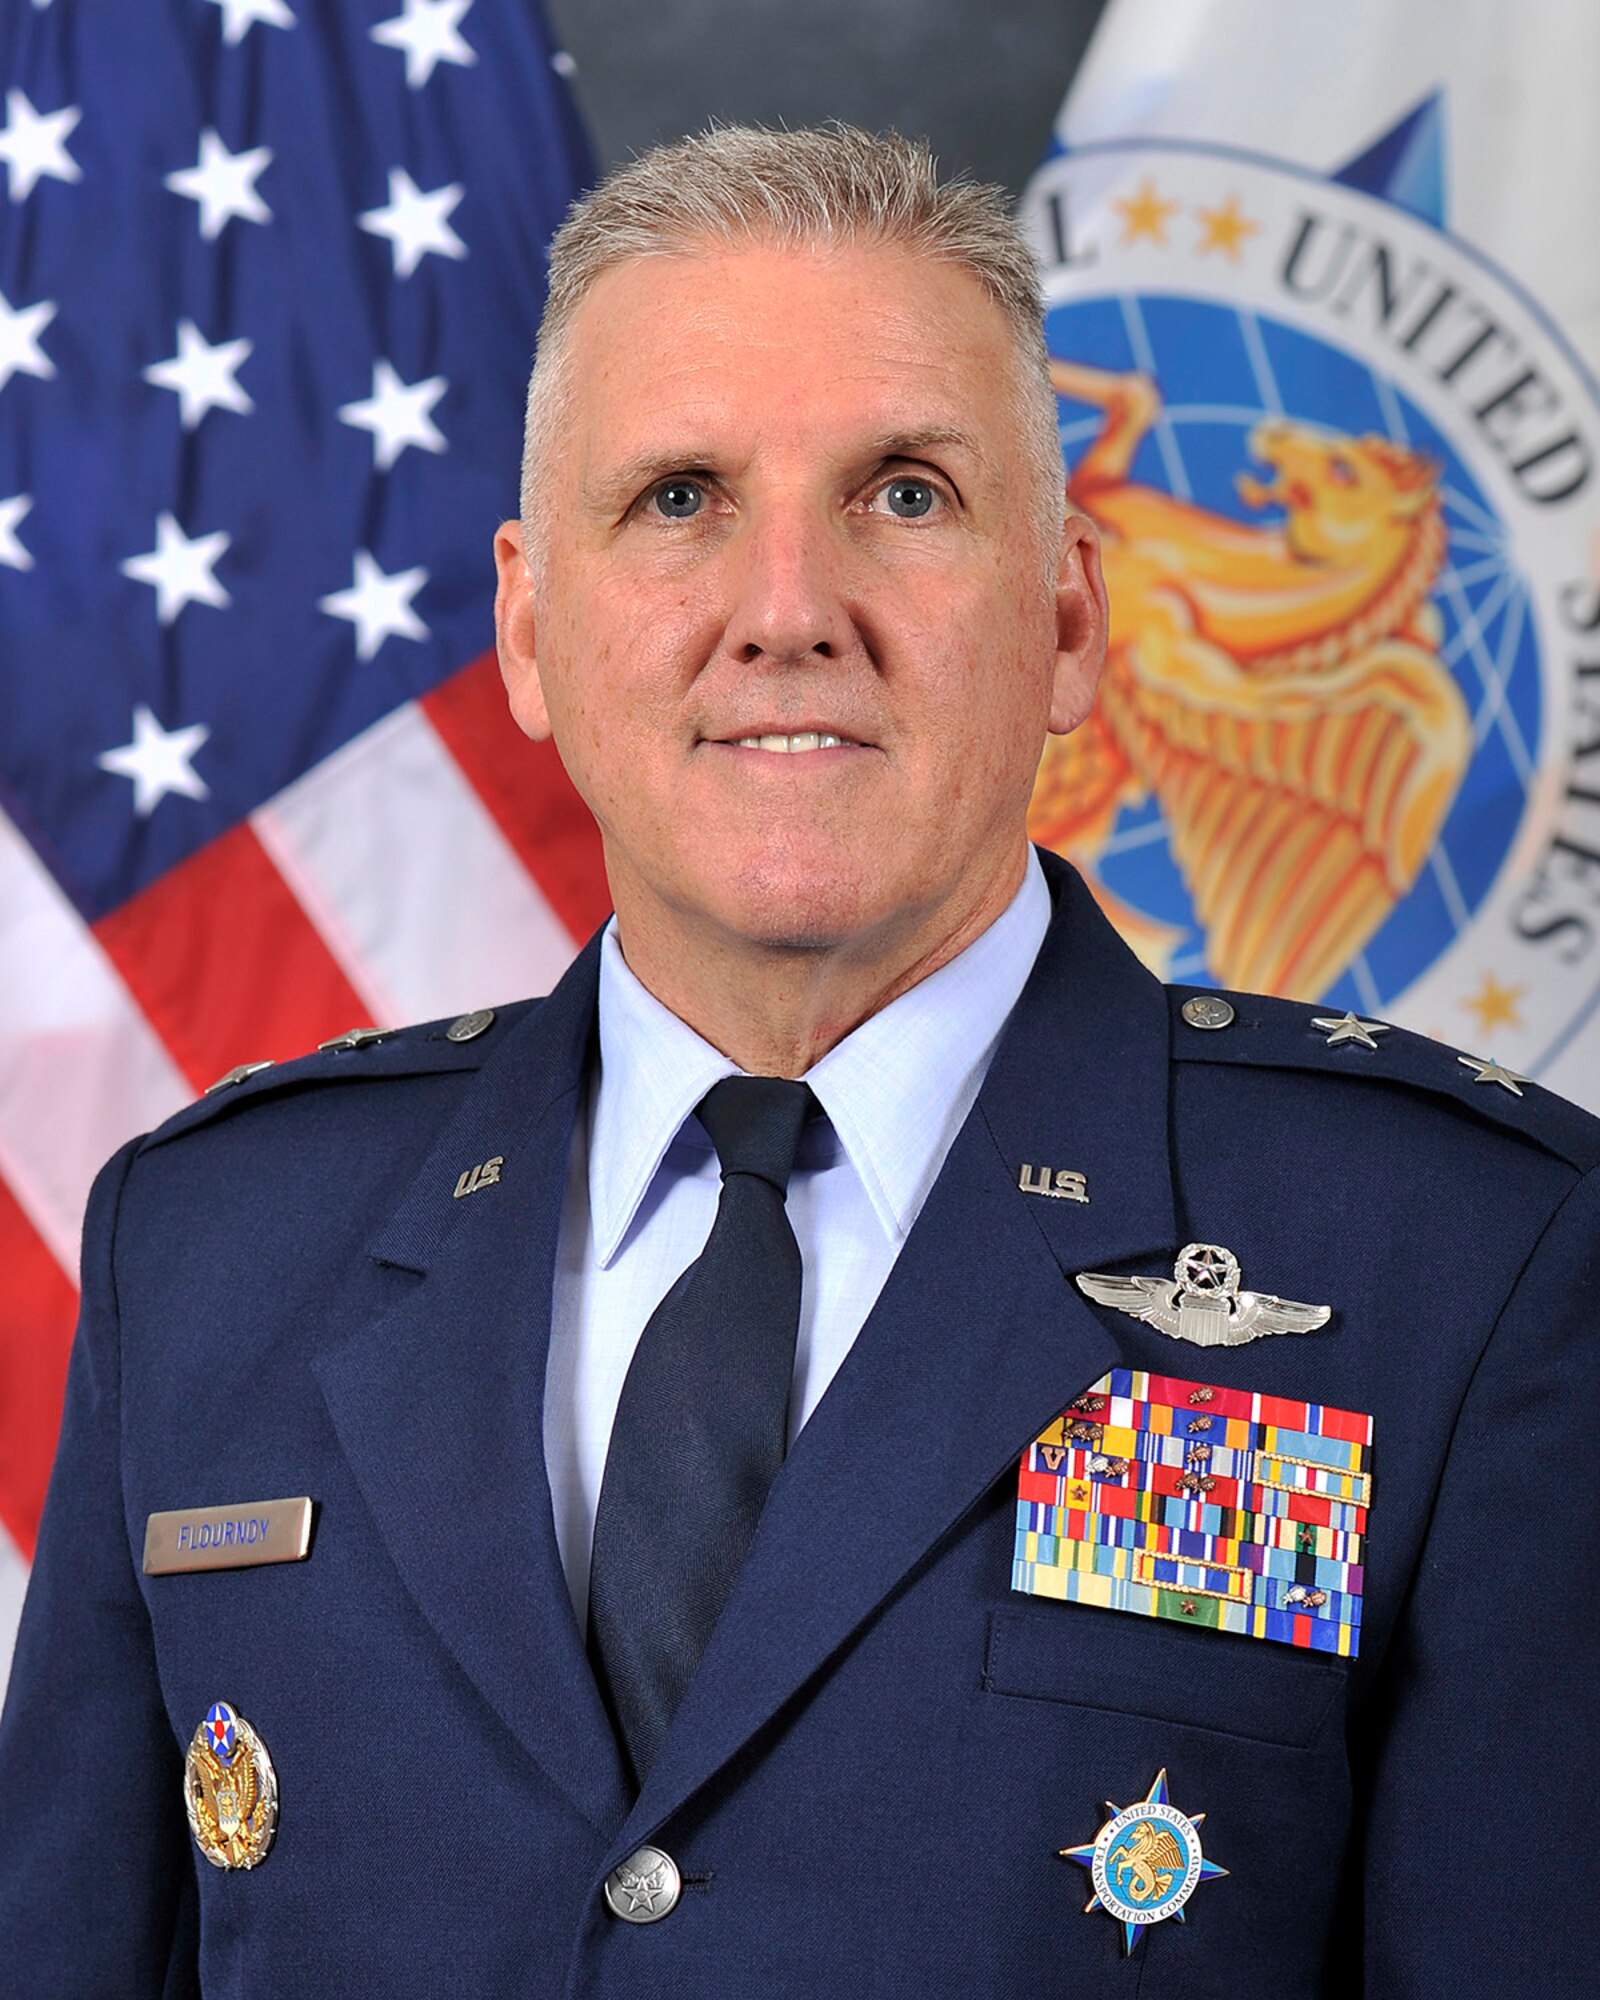 The Air Force Reserve Command proudly announces Maj. Gen. John C. Flournoy, Jr., will serve as the Deputy Commander, Air Force Reserve Command, Robins Air Force Base, Georgia.